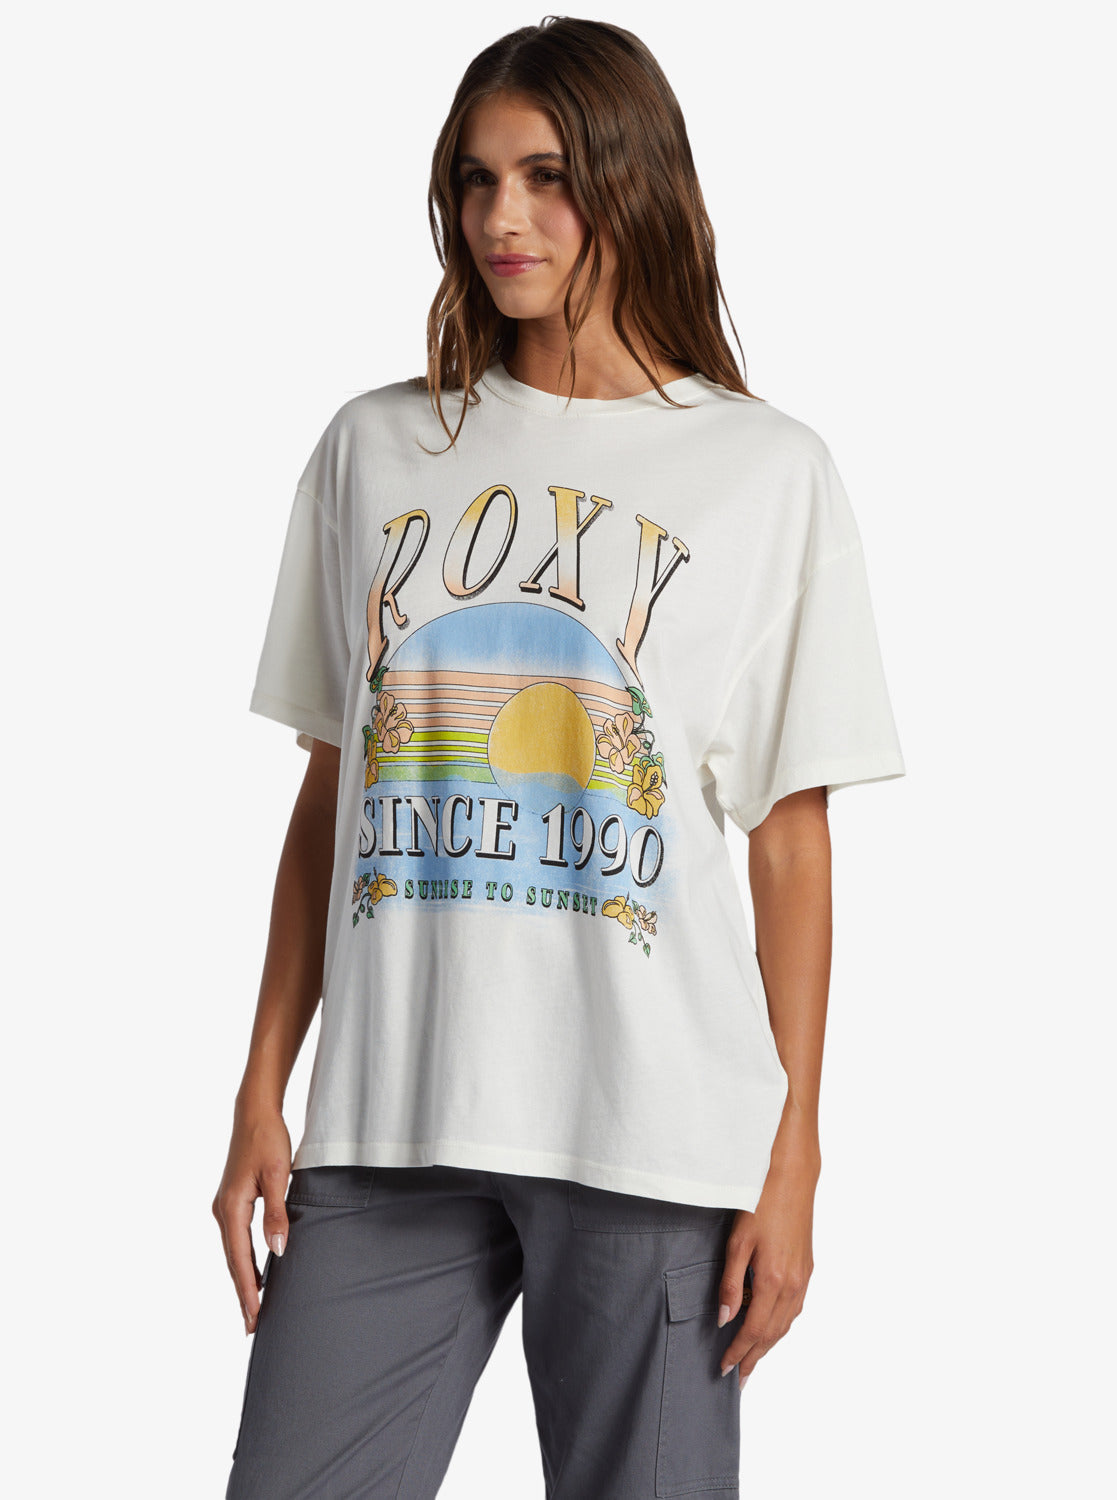 Roxy Women's Oceanside Pant, Sea Salt, Medium – Lizzie Lahaina Couture  Swimwear Made In Maui